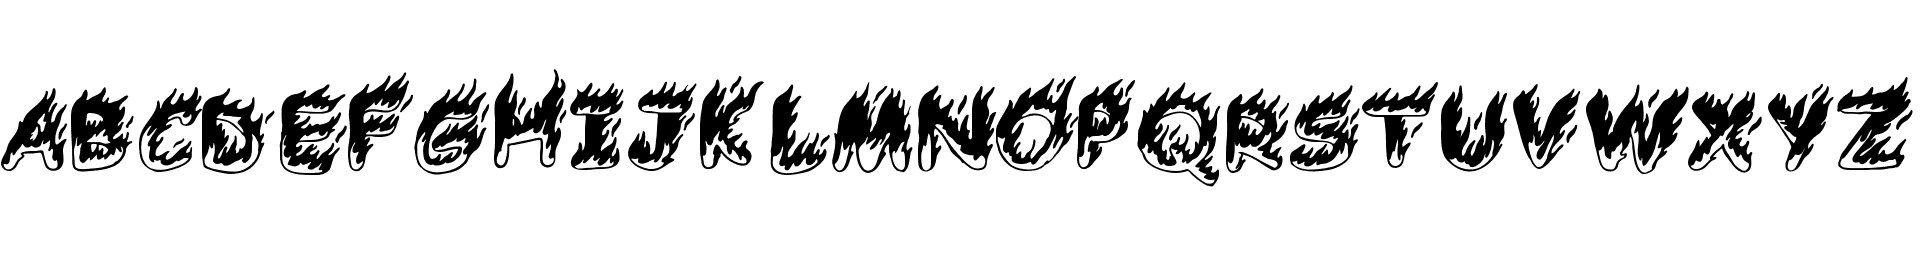 Cartoon Fire Thrasher Logo - Free Fire fonts